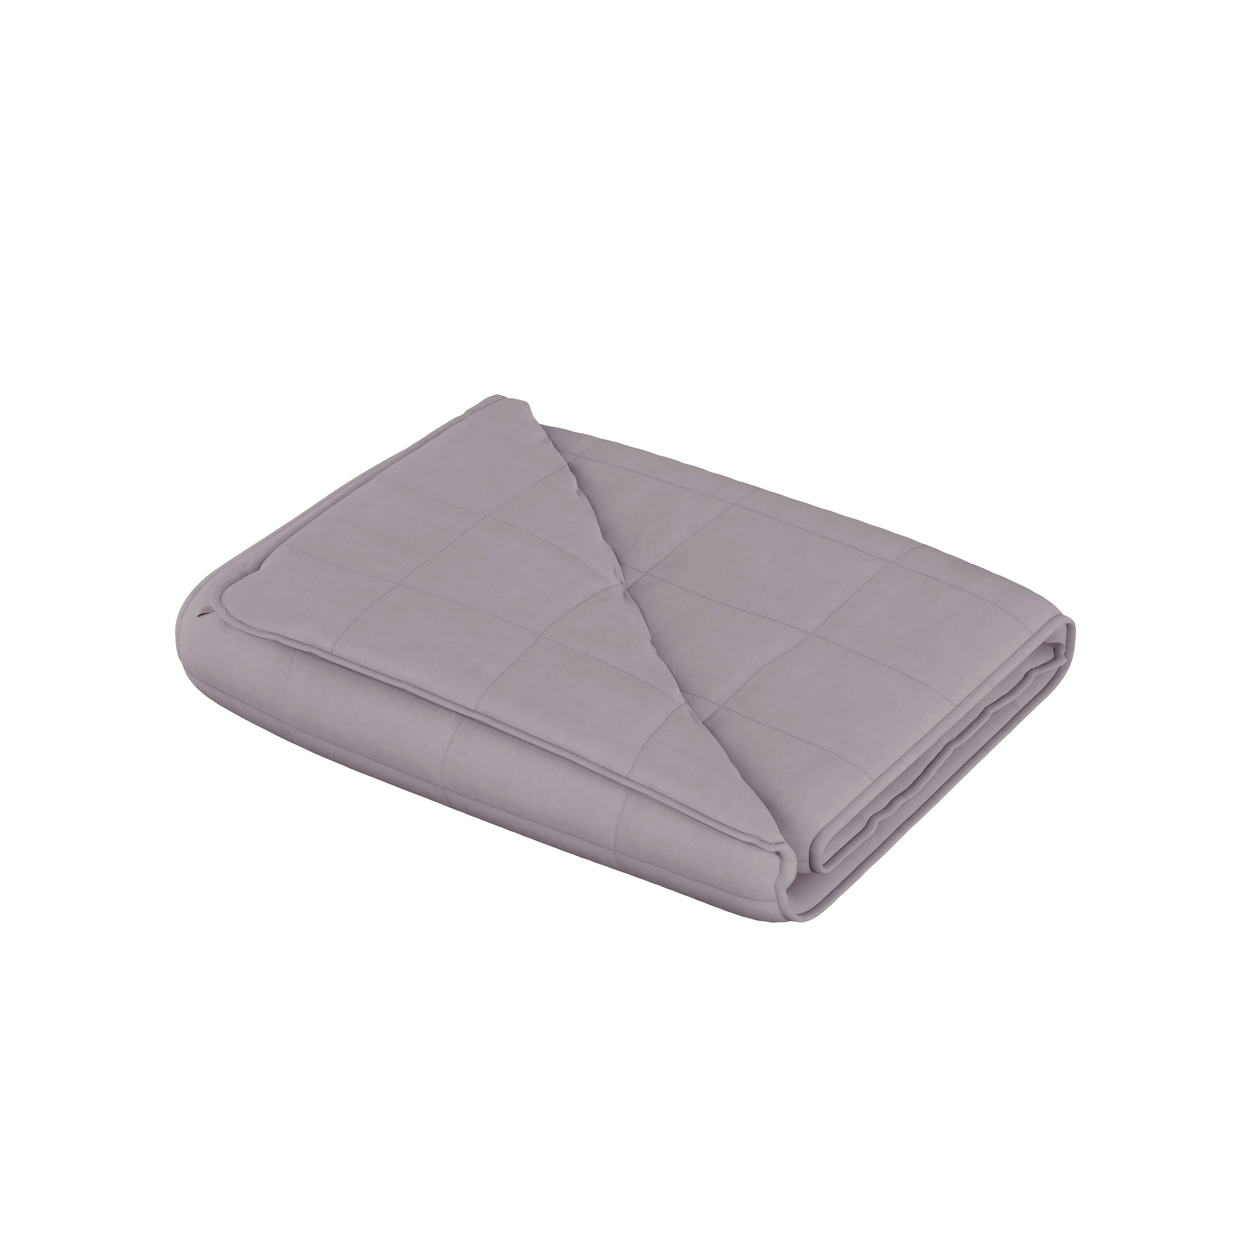 Weighted 20lb Throw Blanket 90-125lbs Ultra Soft Cotton 41x60 Sleep Aid, Gray